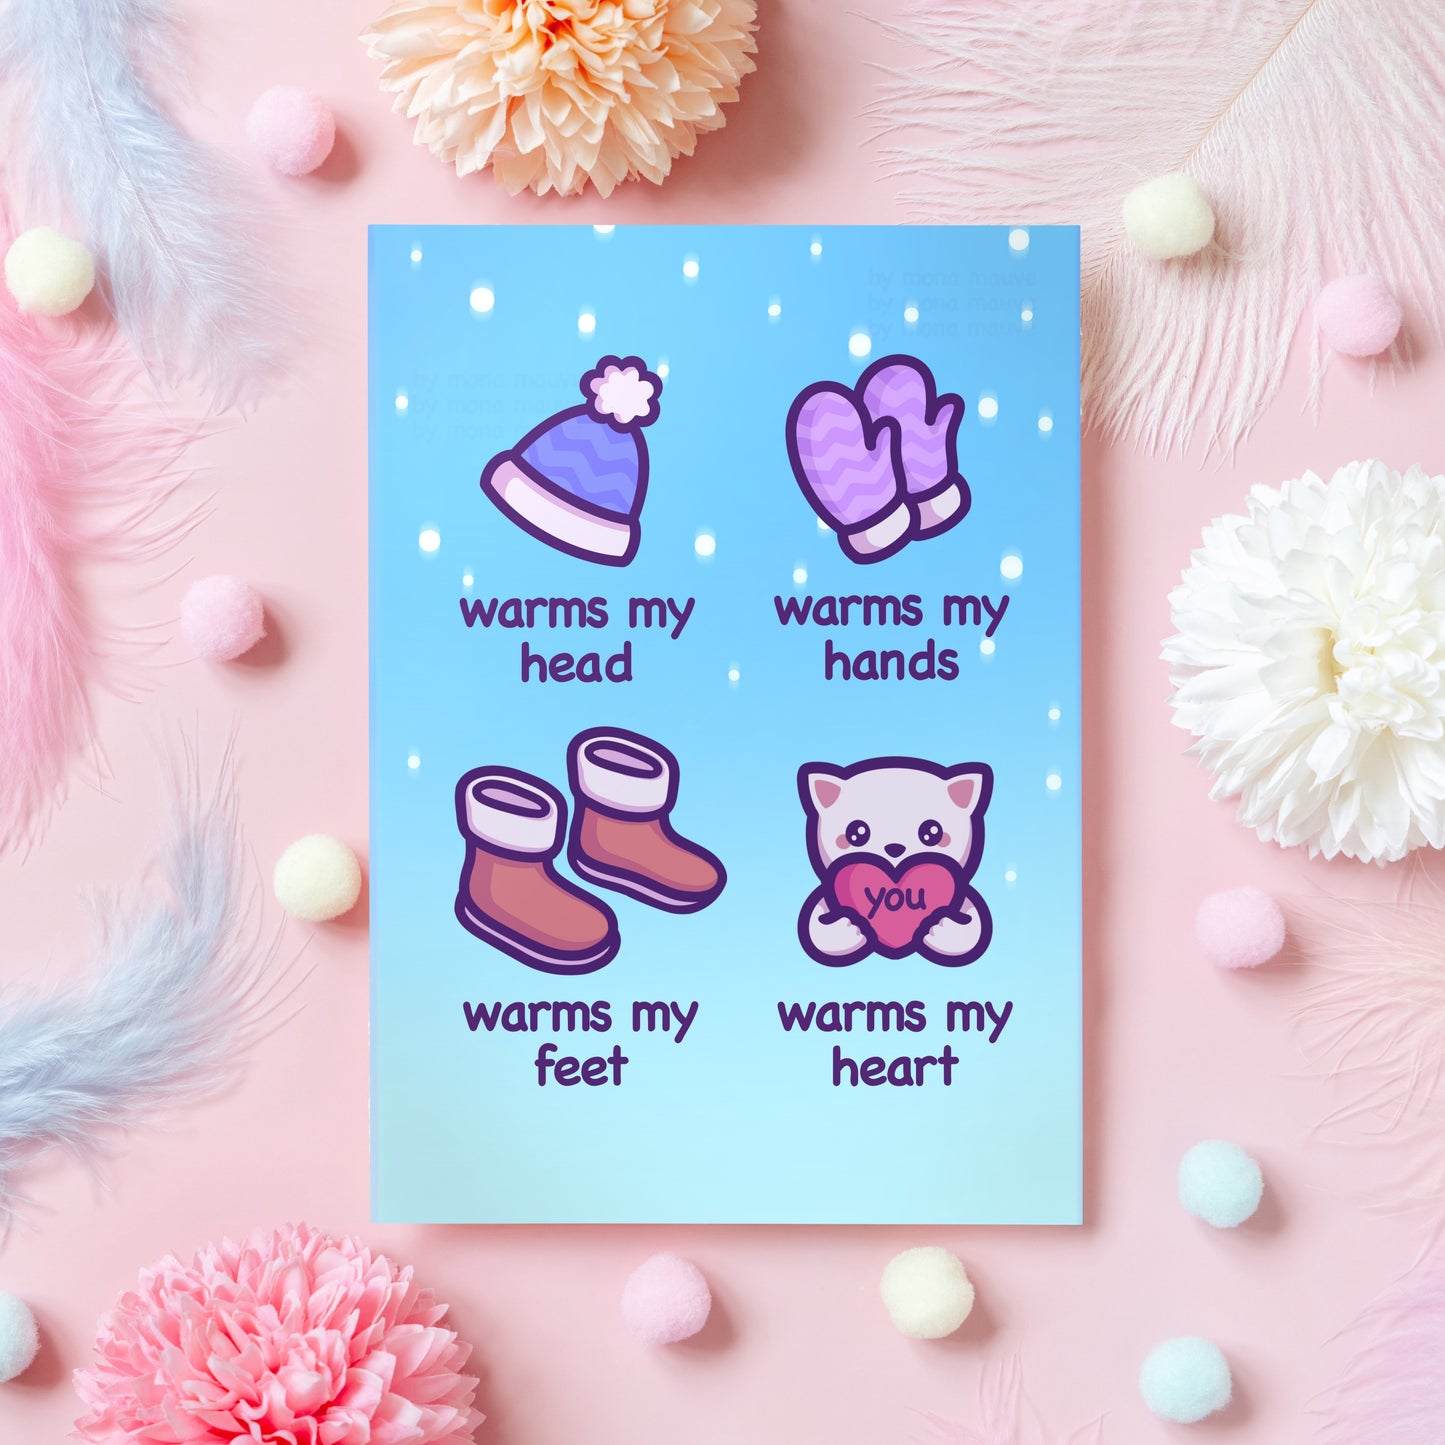 You Warm My Heart! | Cute & Heartfelt Just Because Card | For Dad, Mom, Grandma, Grandpa, Best Friend - Her or Him